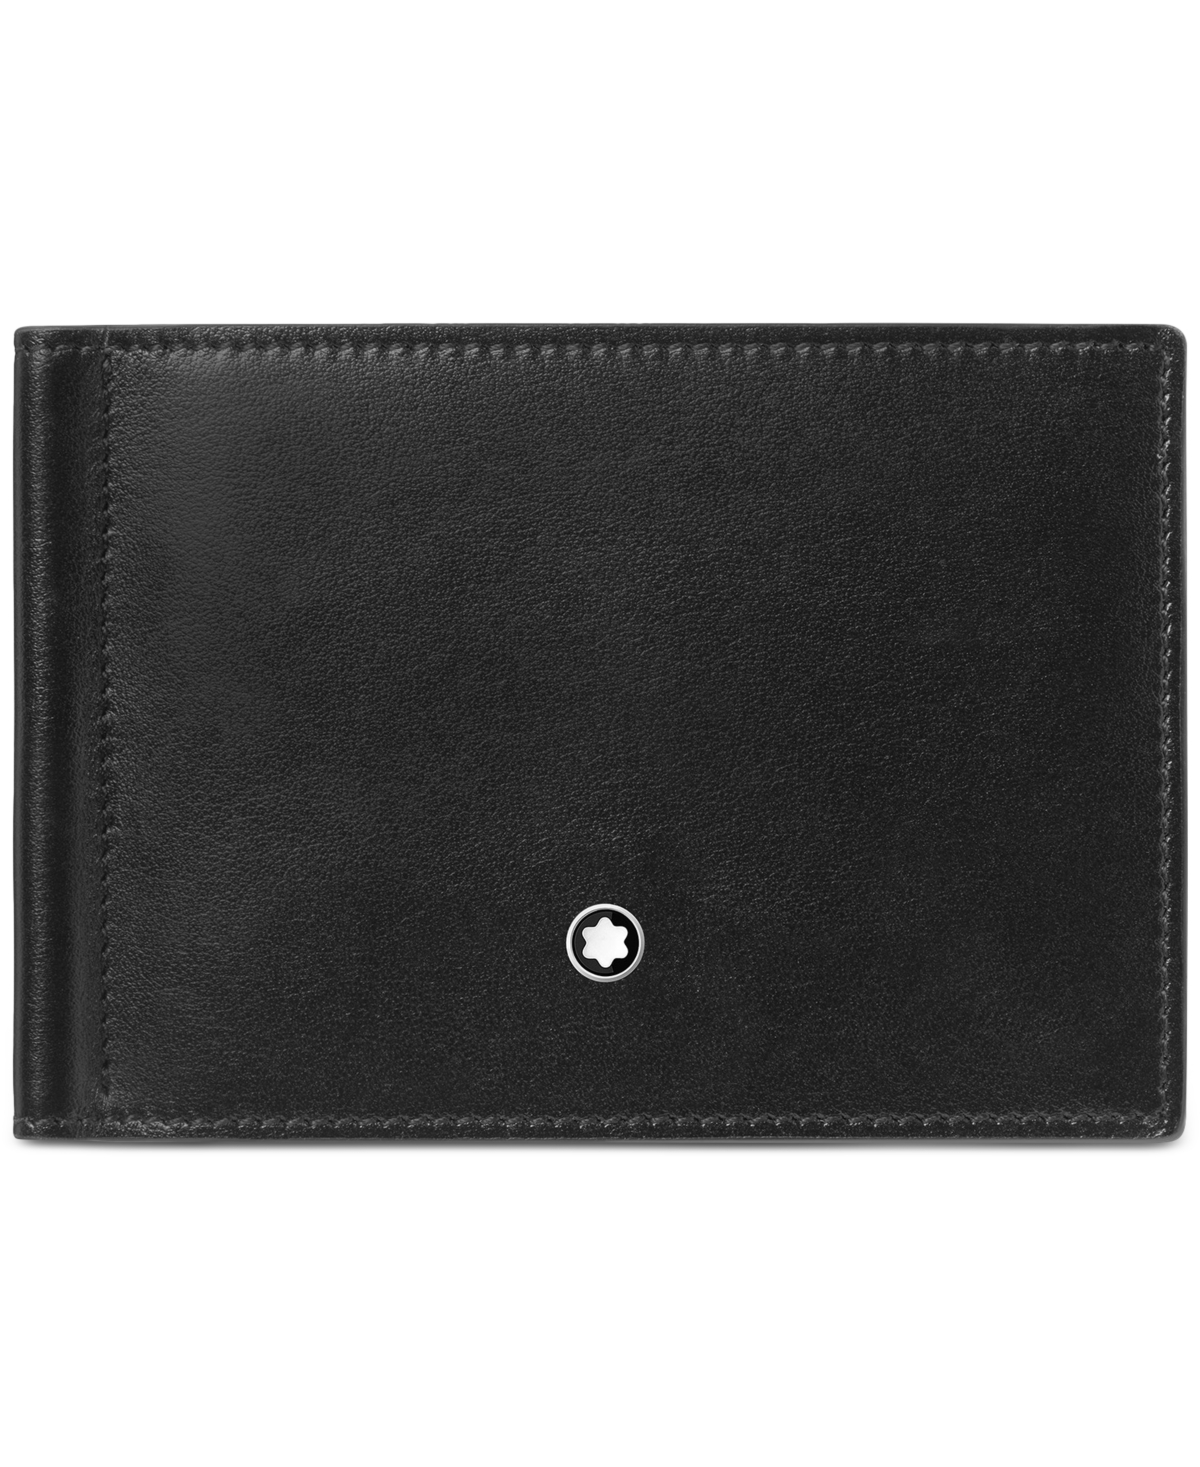 Meisterstuck Leather Wallet - Black